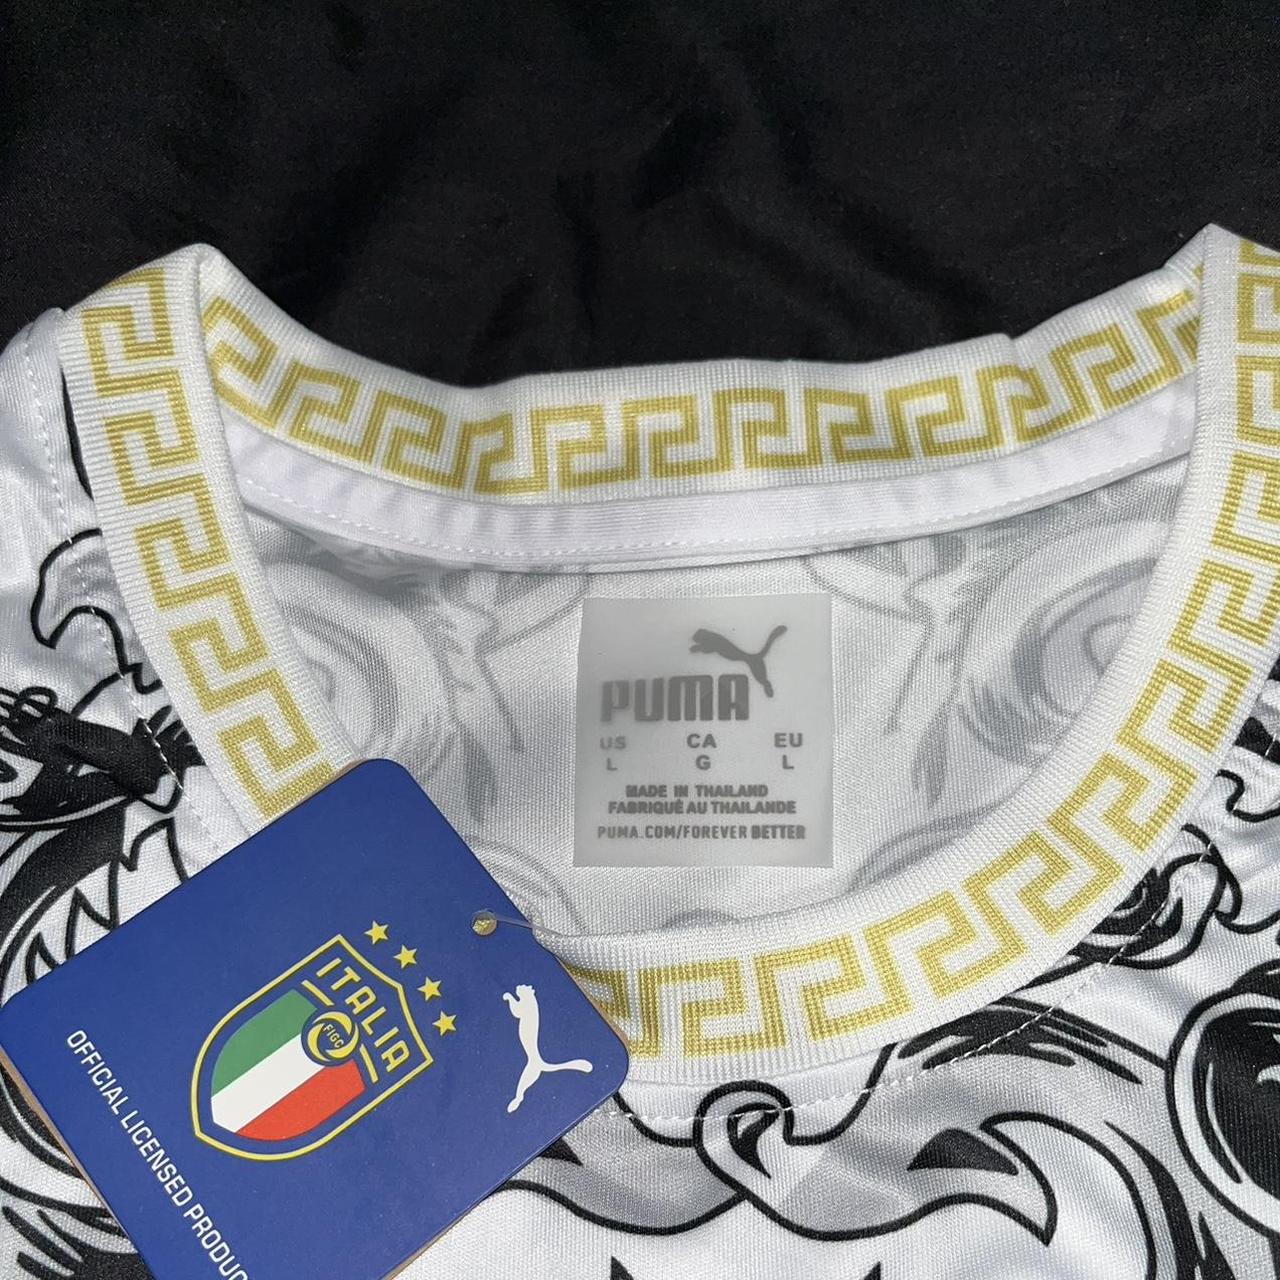 Italy x Versace Jersey – MS Soccer Jerseys